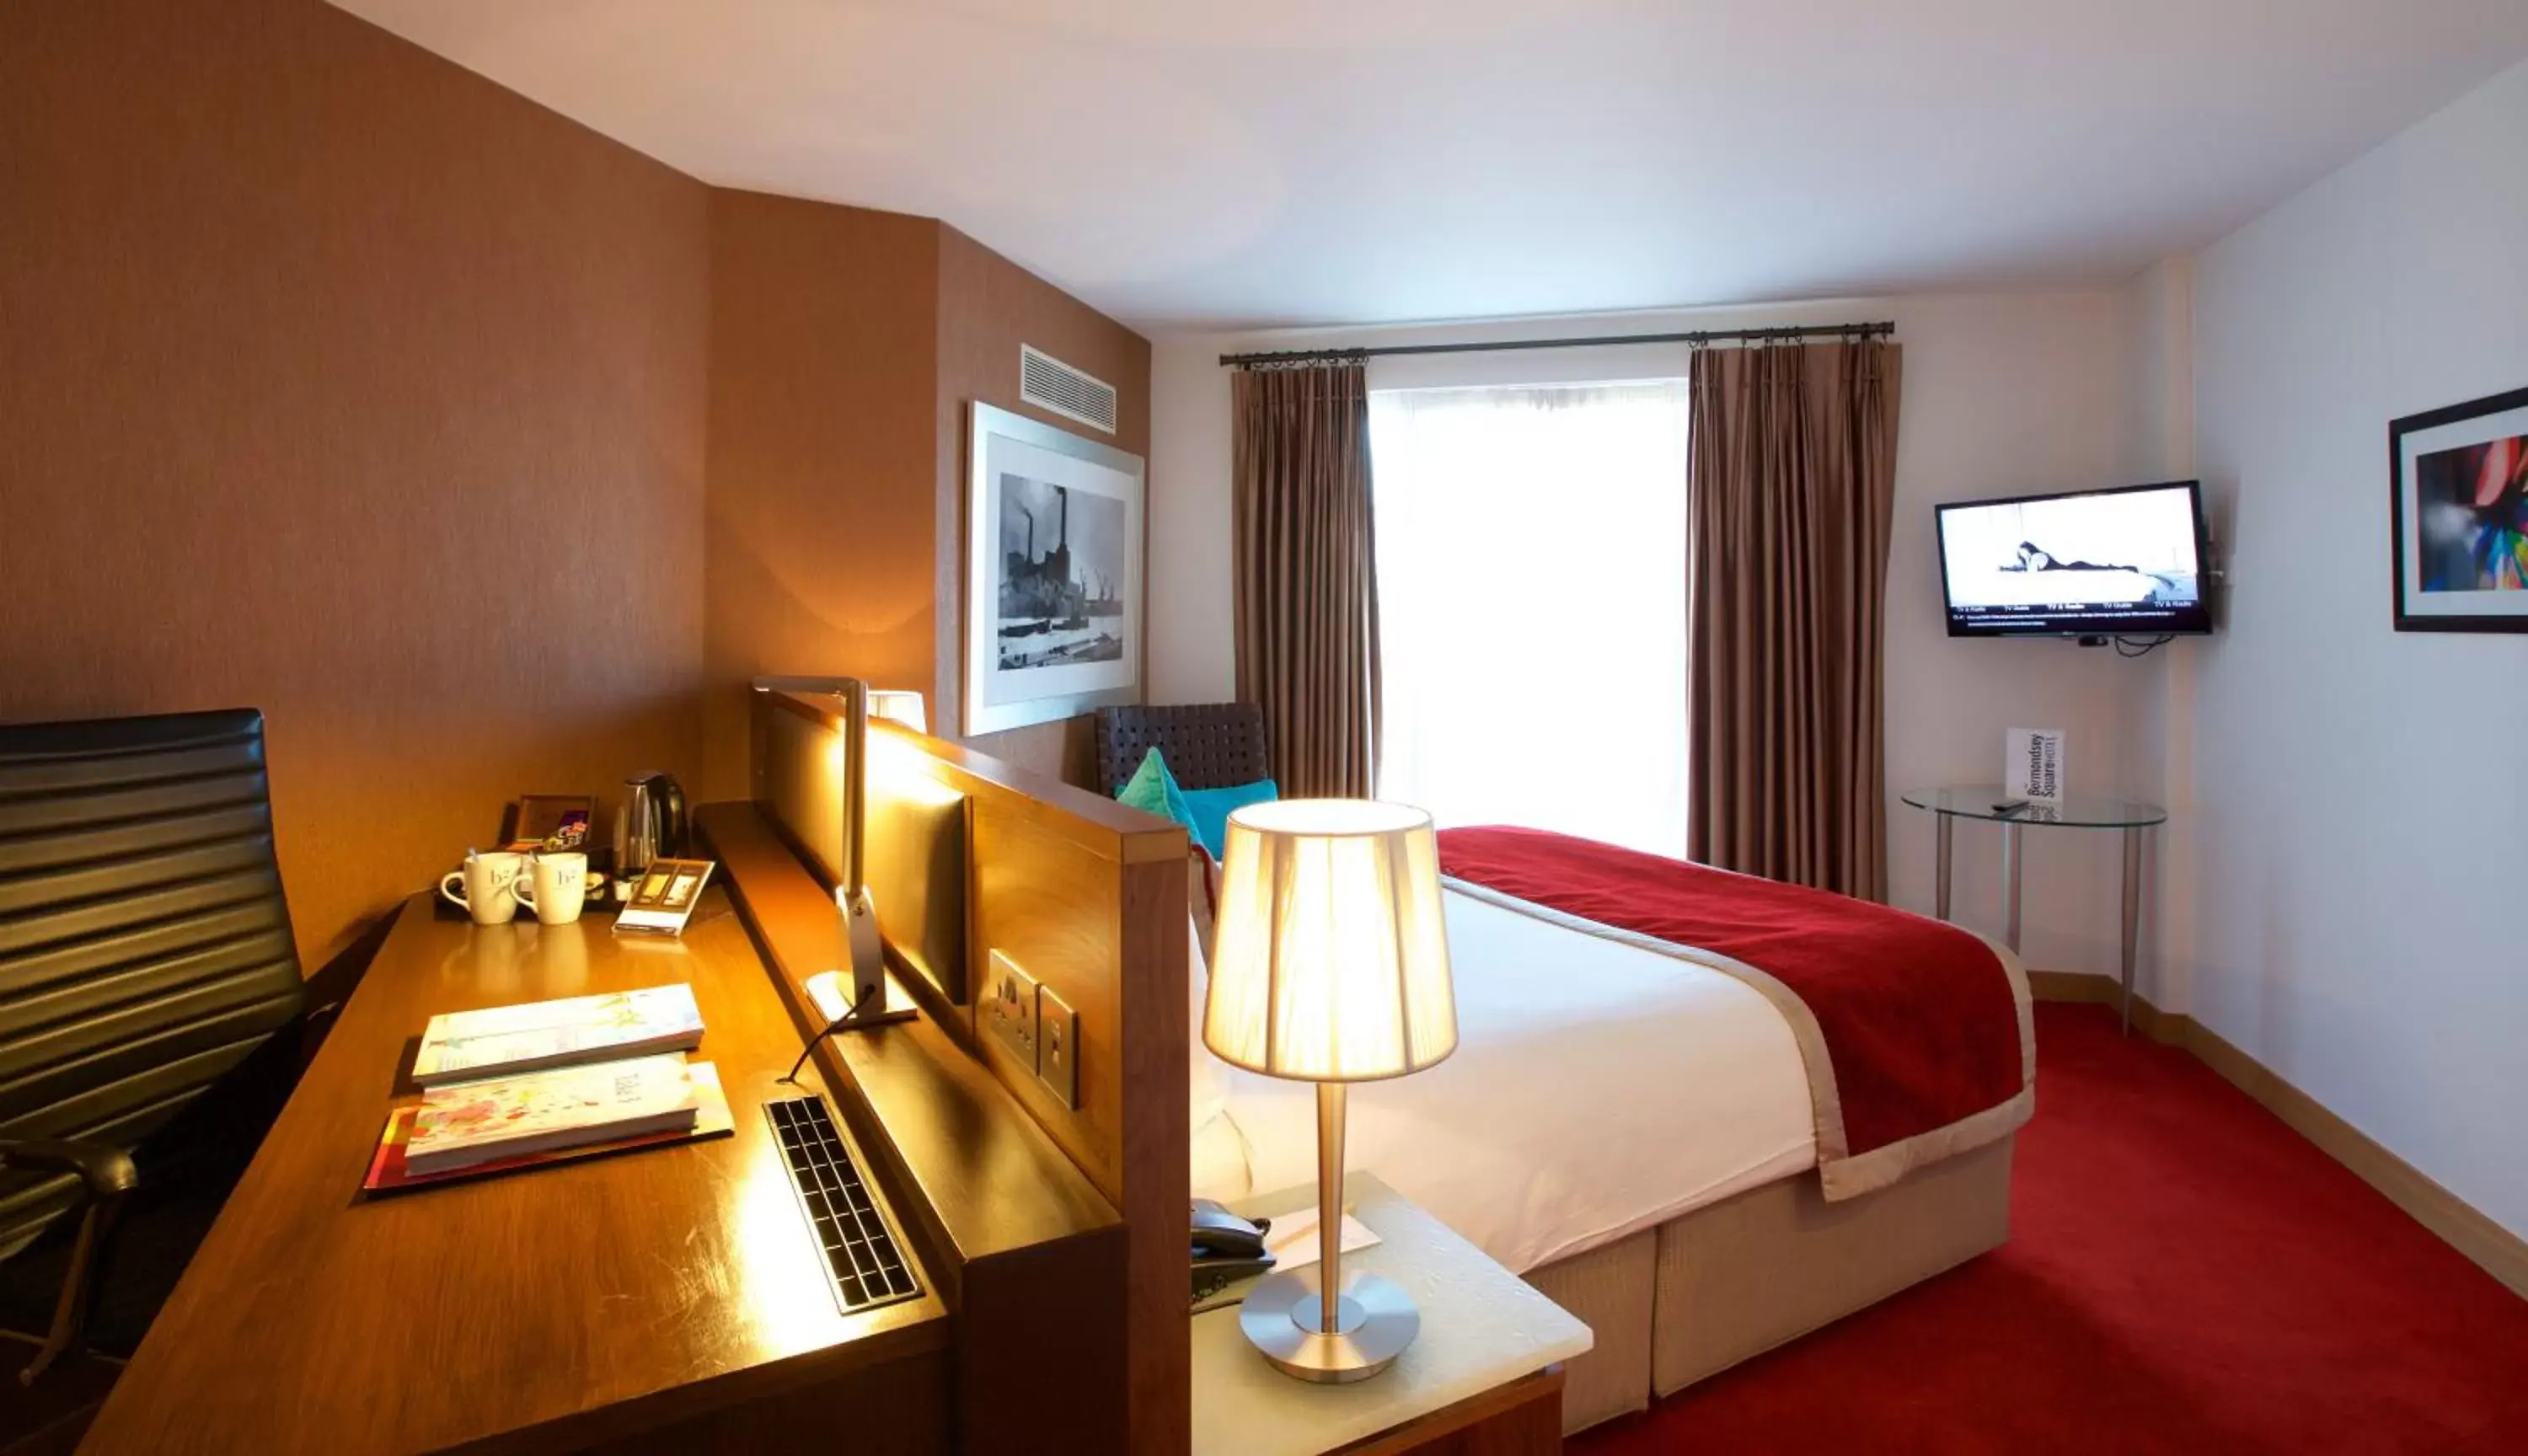 Bedroom, TV/Entertainment Center in Bermondsey Square Hotel - A Bespoke Hotel